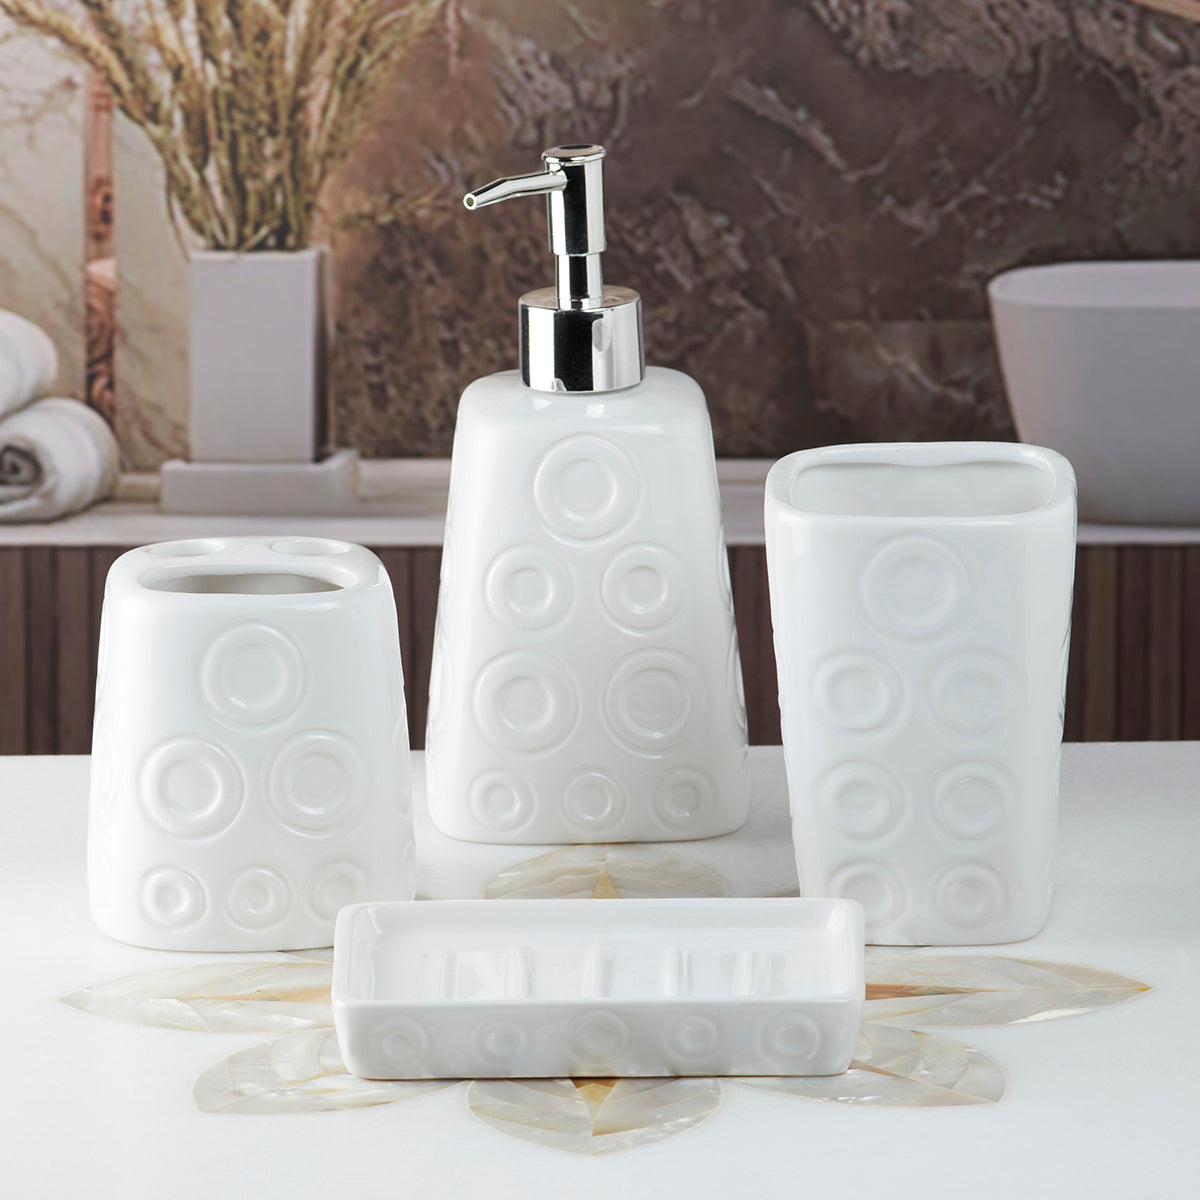 Ceramic Bathroom Accessories Set of 4 Bath Set with Soap Dispenser (8158)